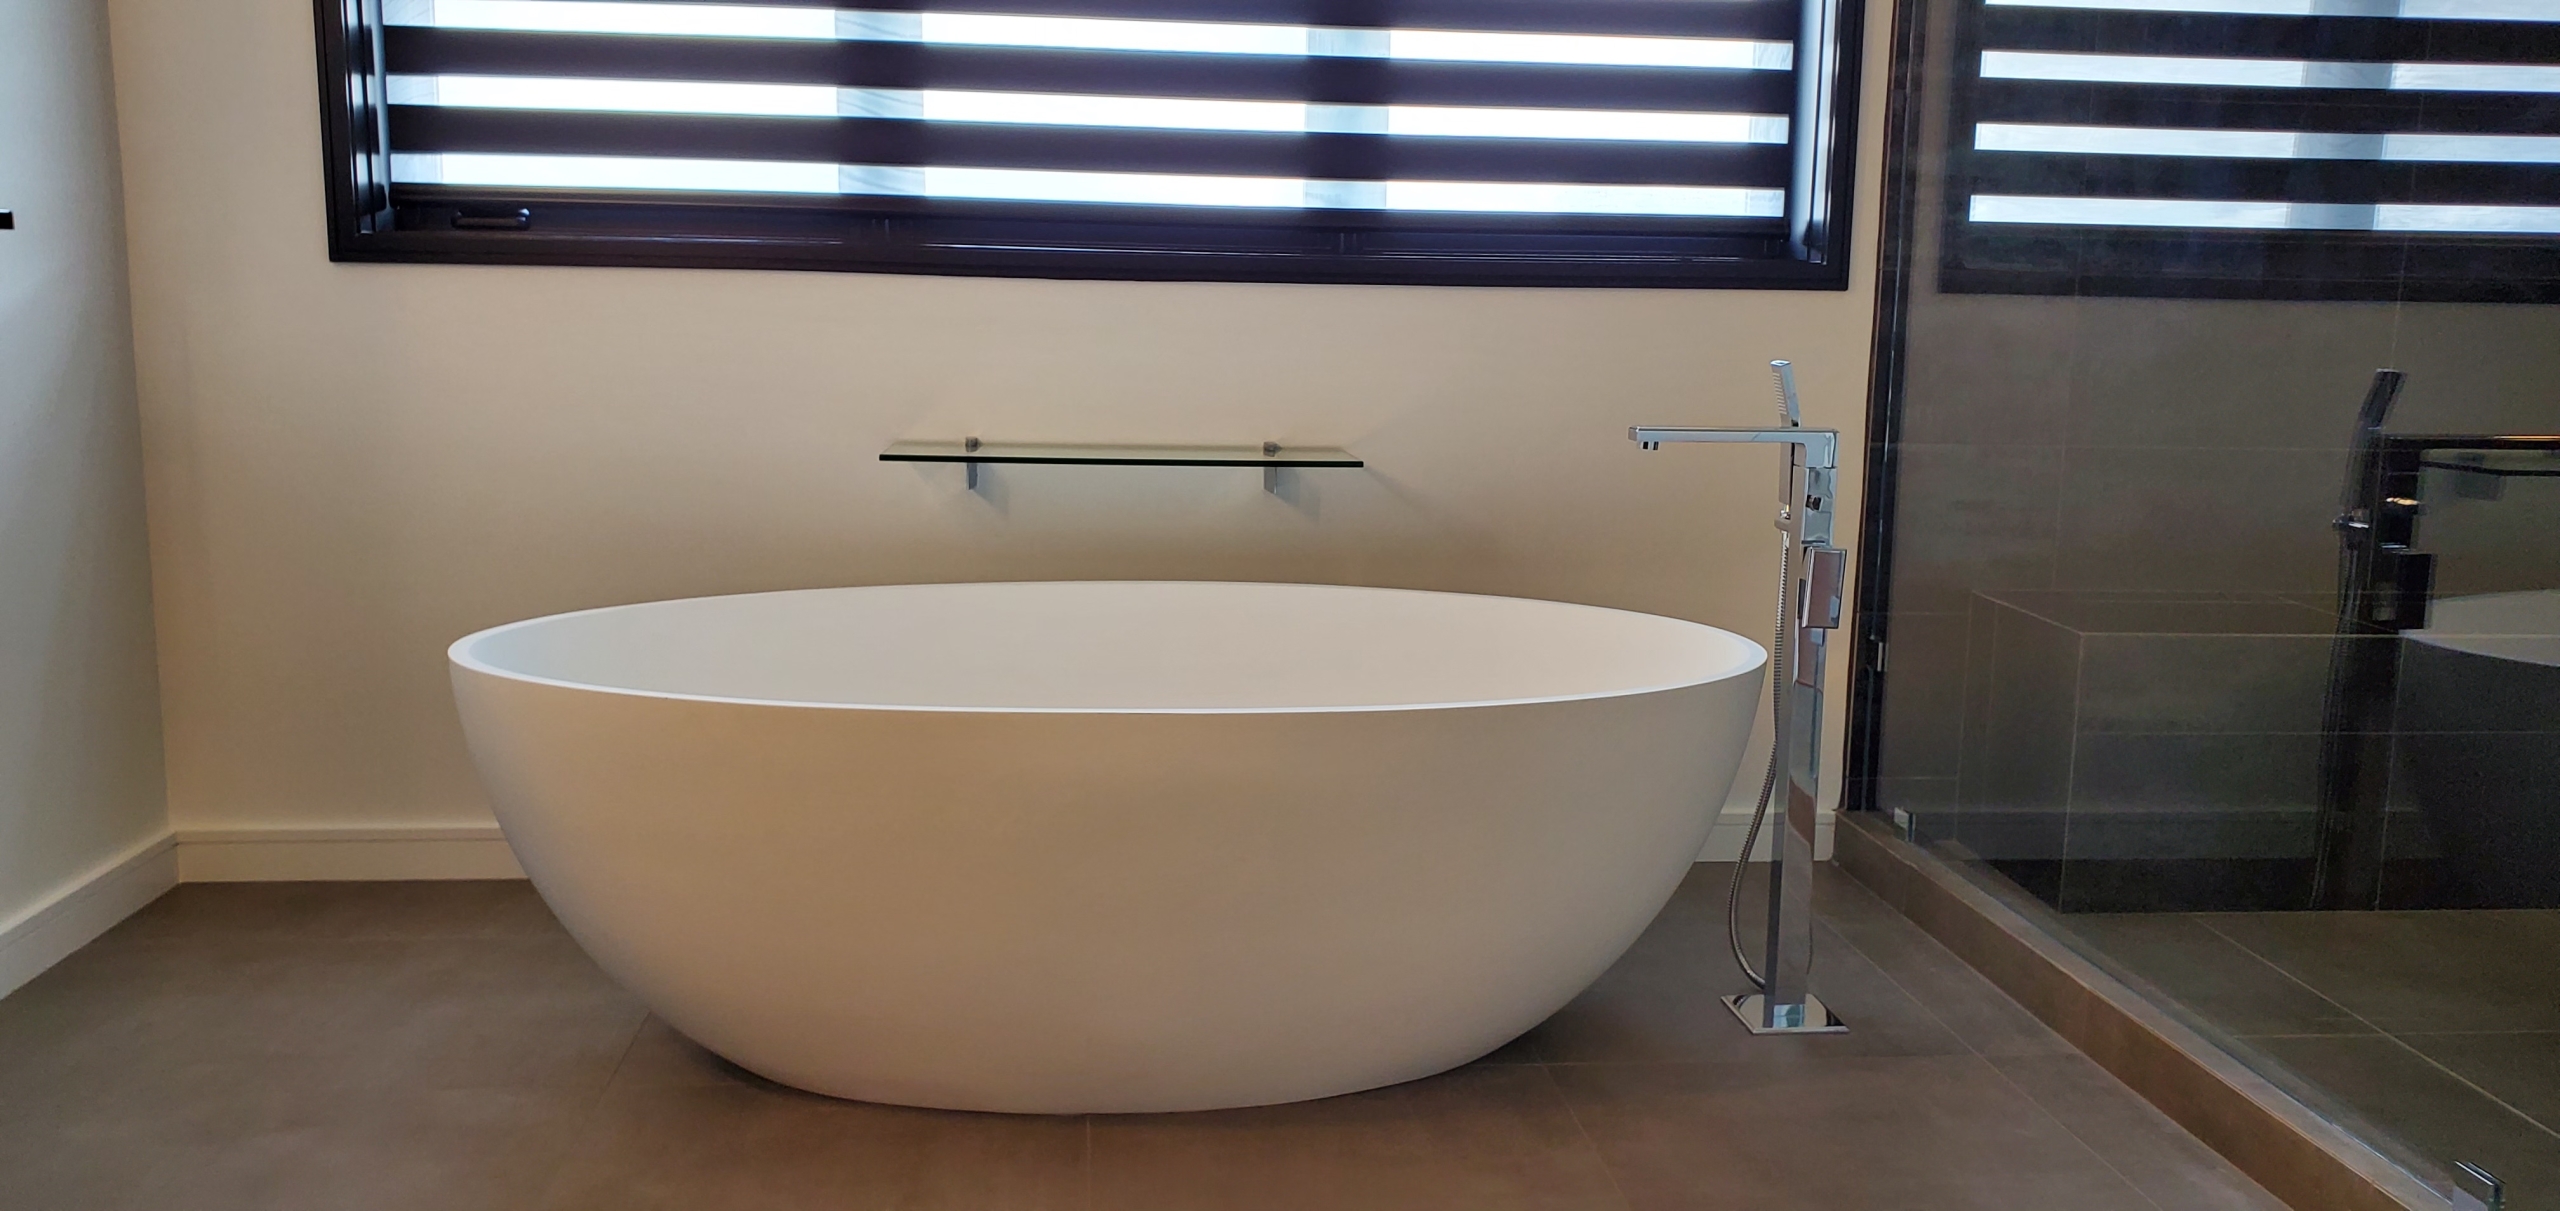 custom home bathtub